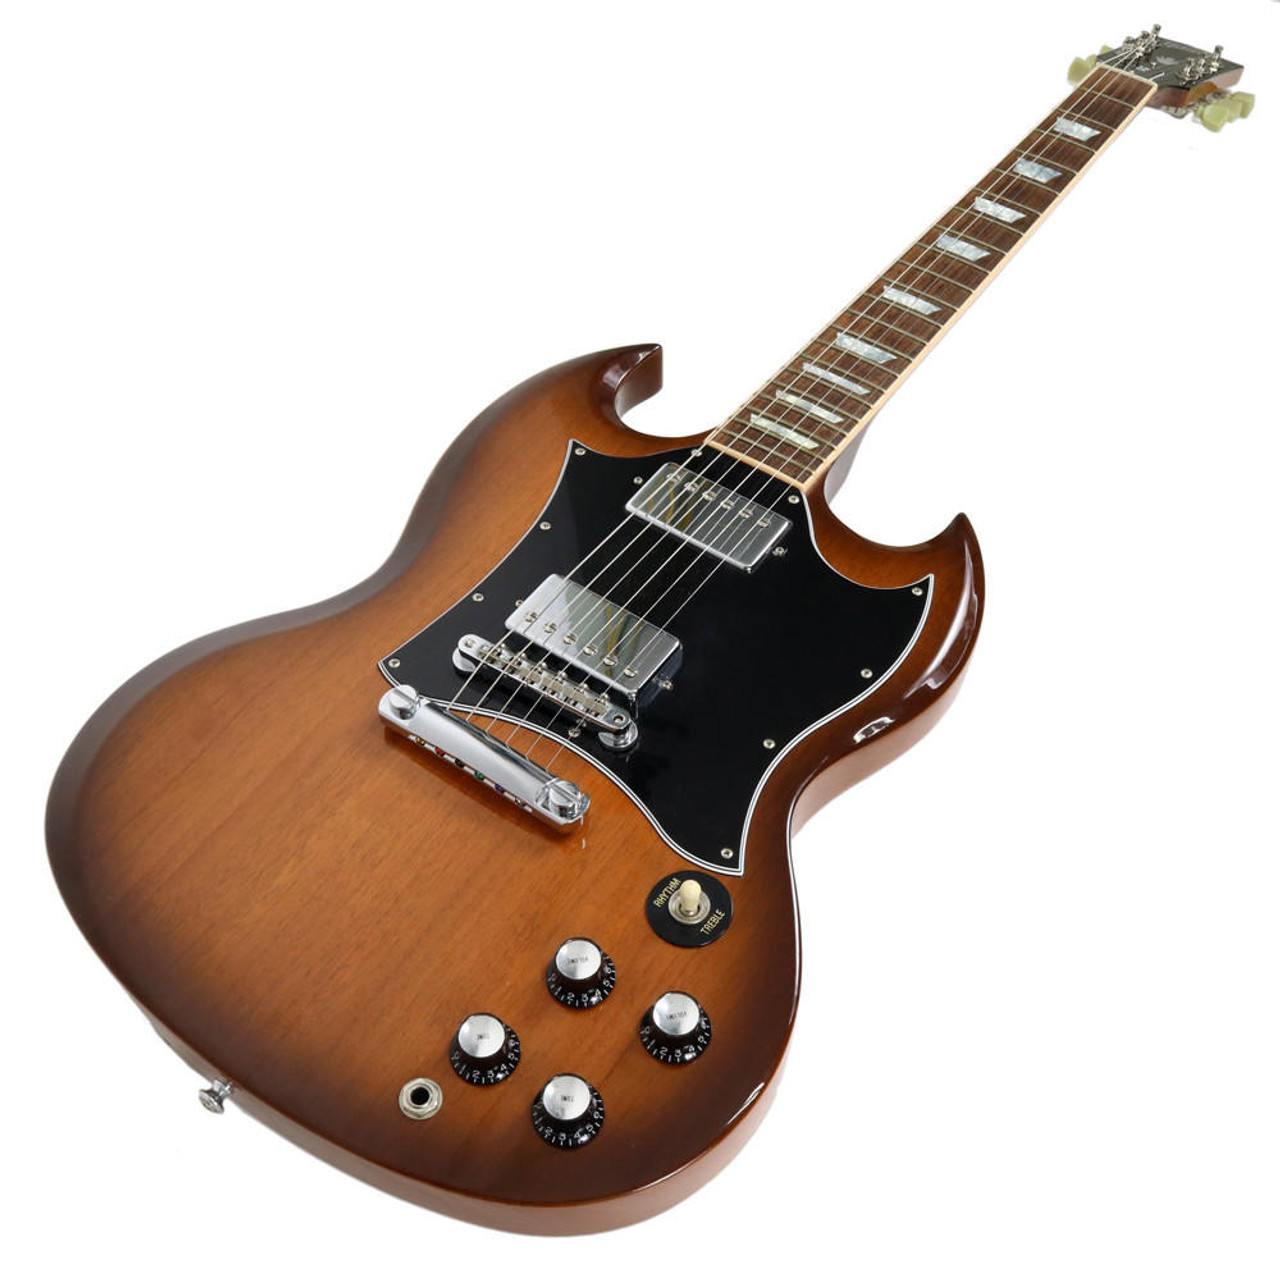 2002 Gibson SG Standard in Natural Burst